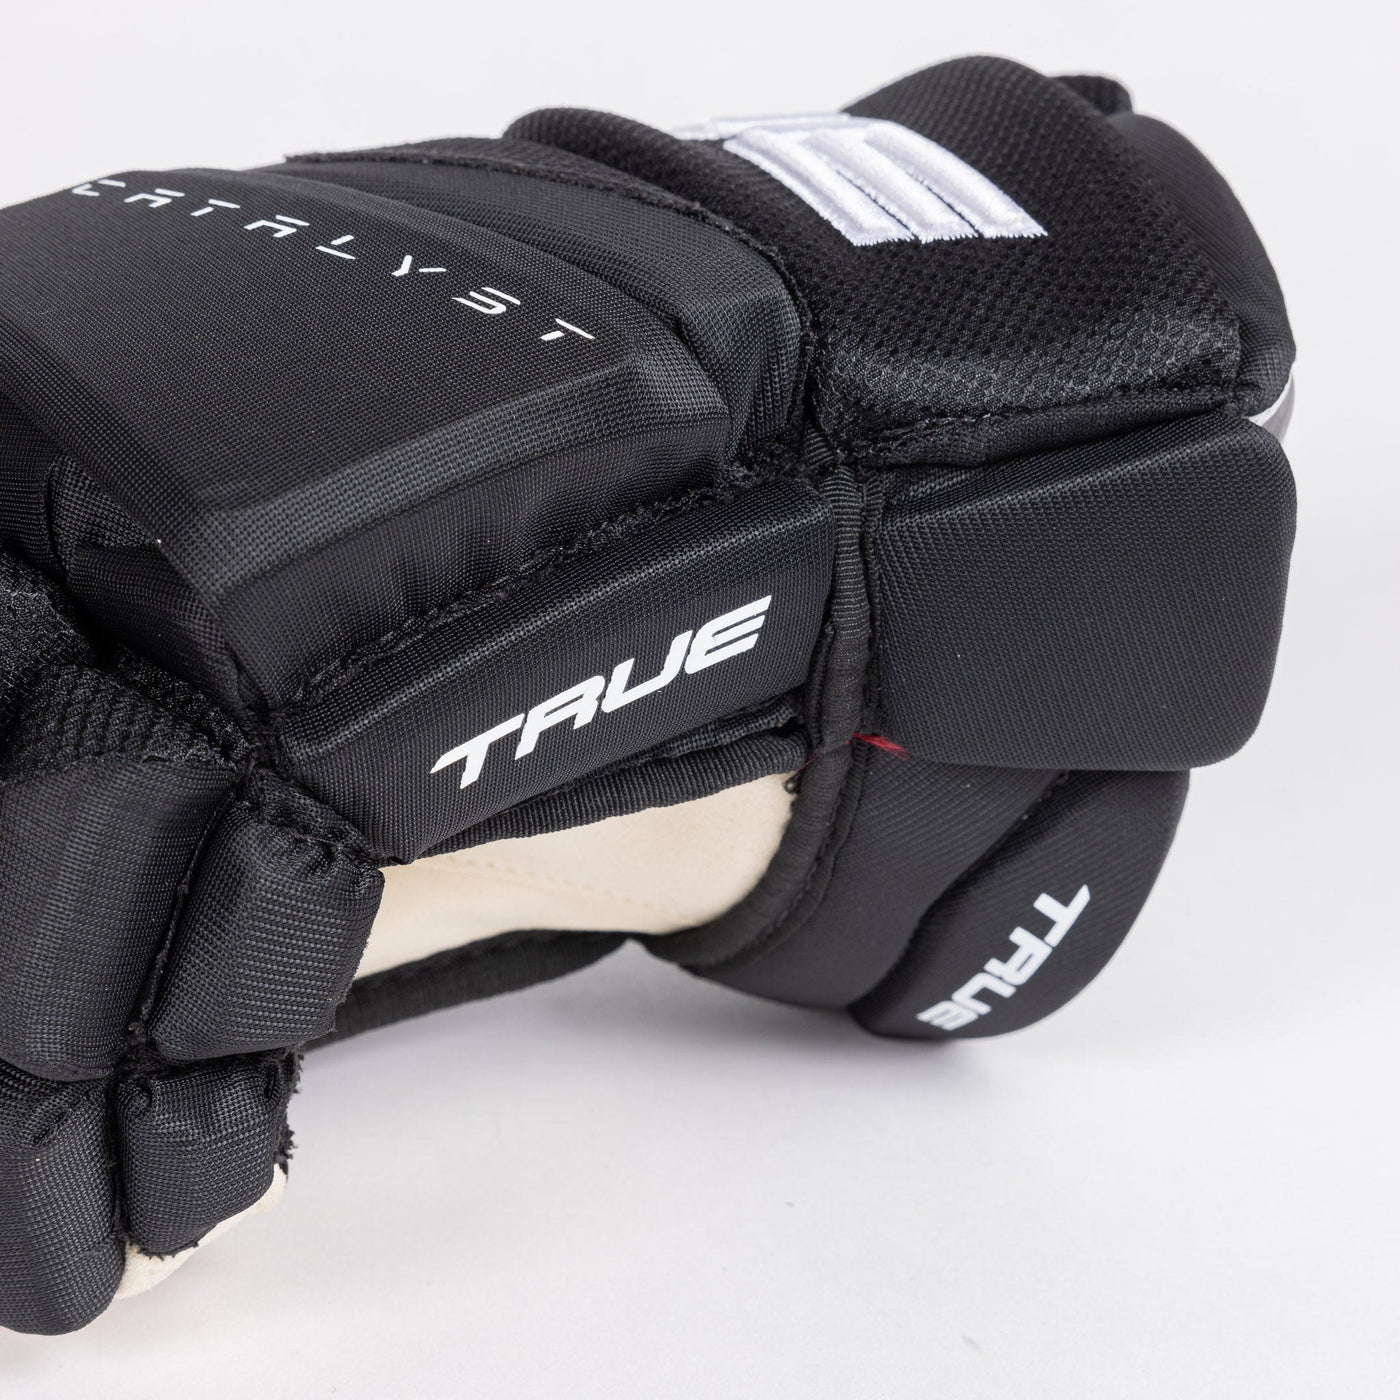 TRUE Catalyst Pro Stock Senior Hockey Glove - Minnesota - The Hockey Shop Source For Sports